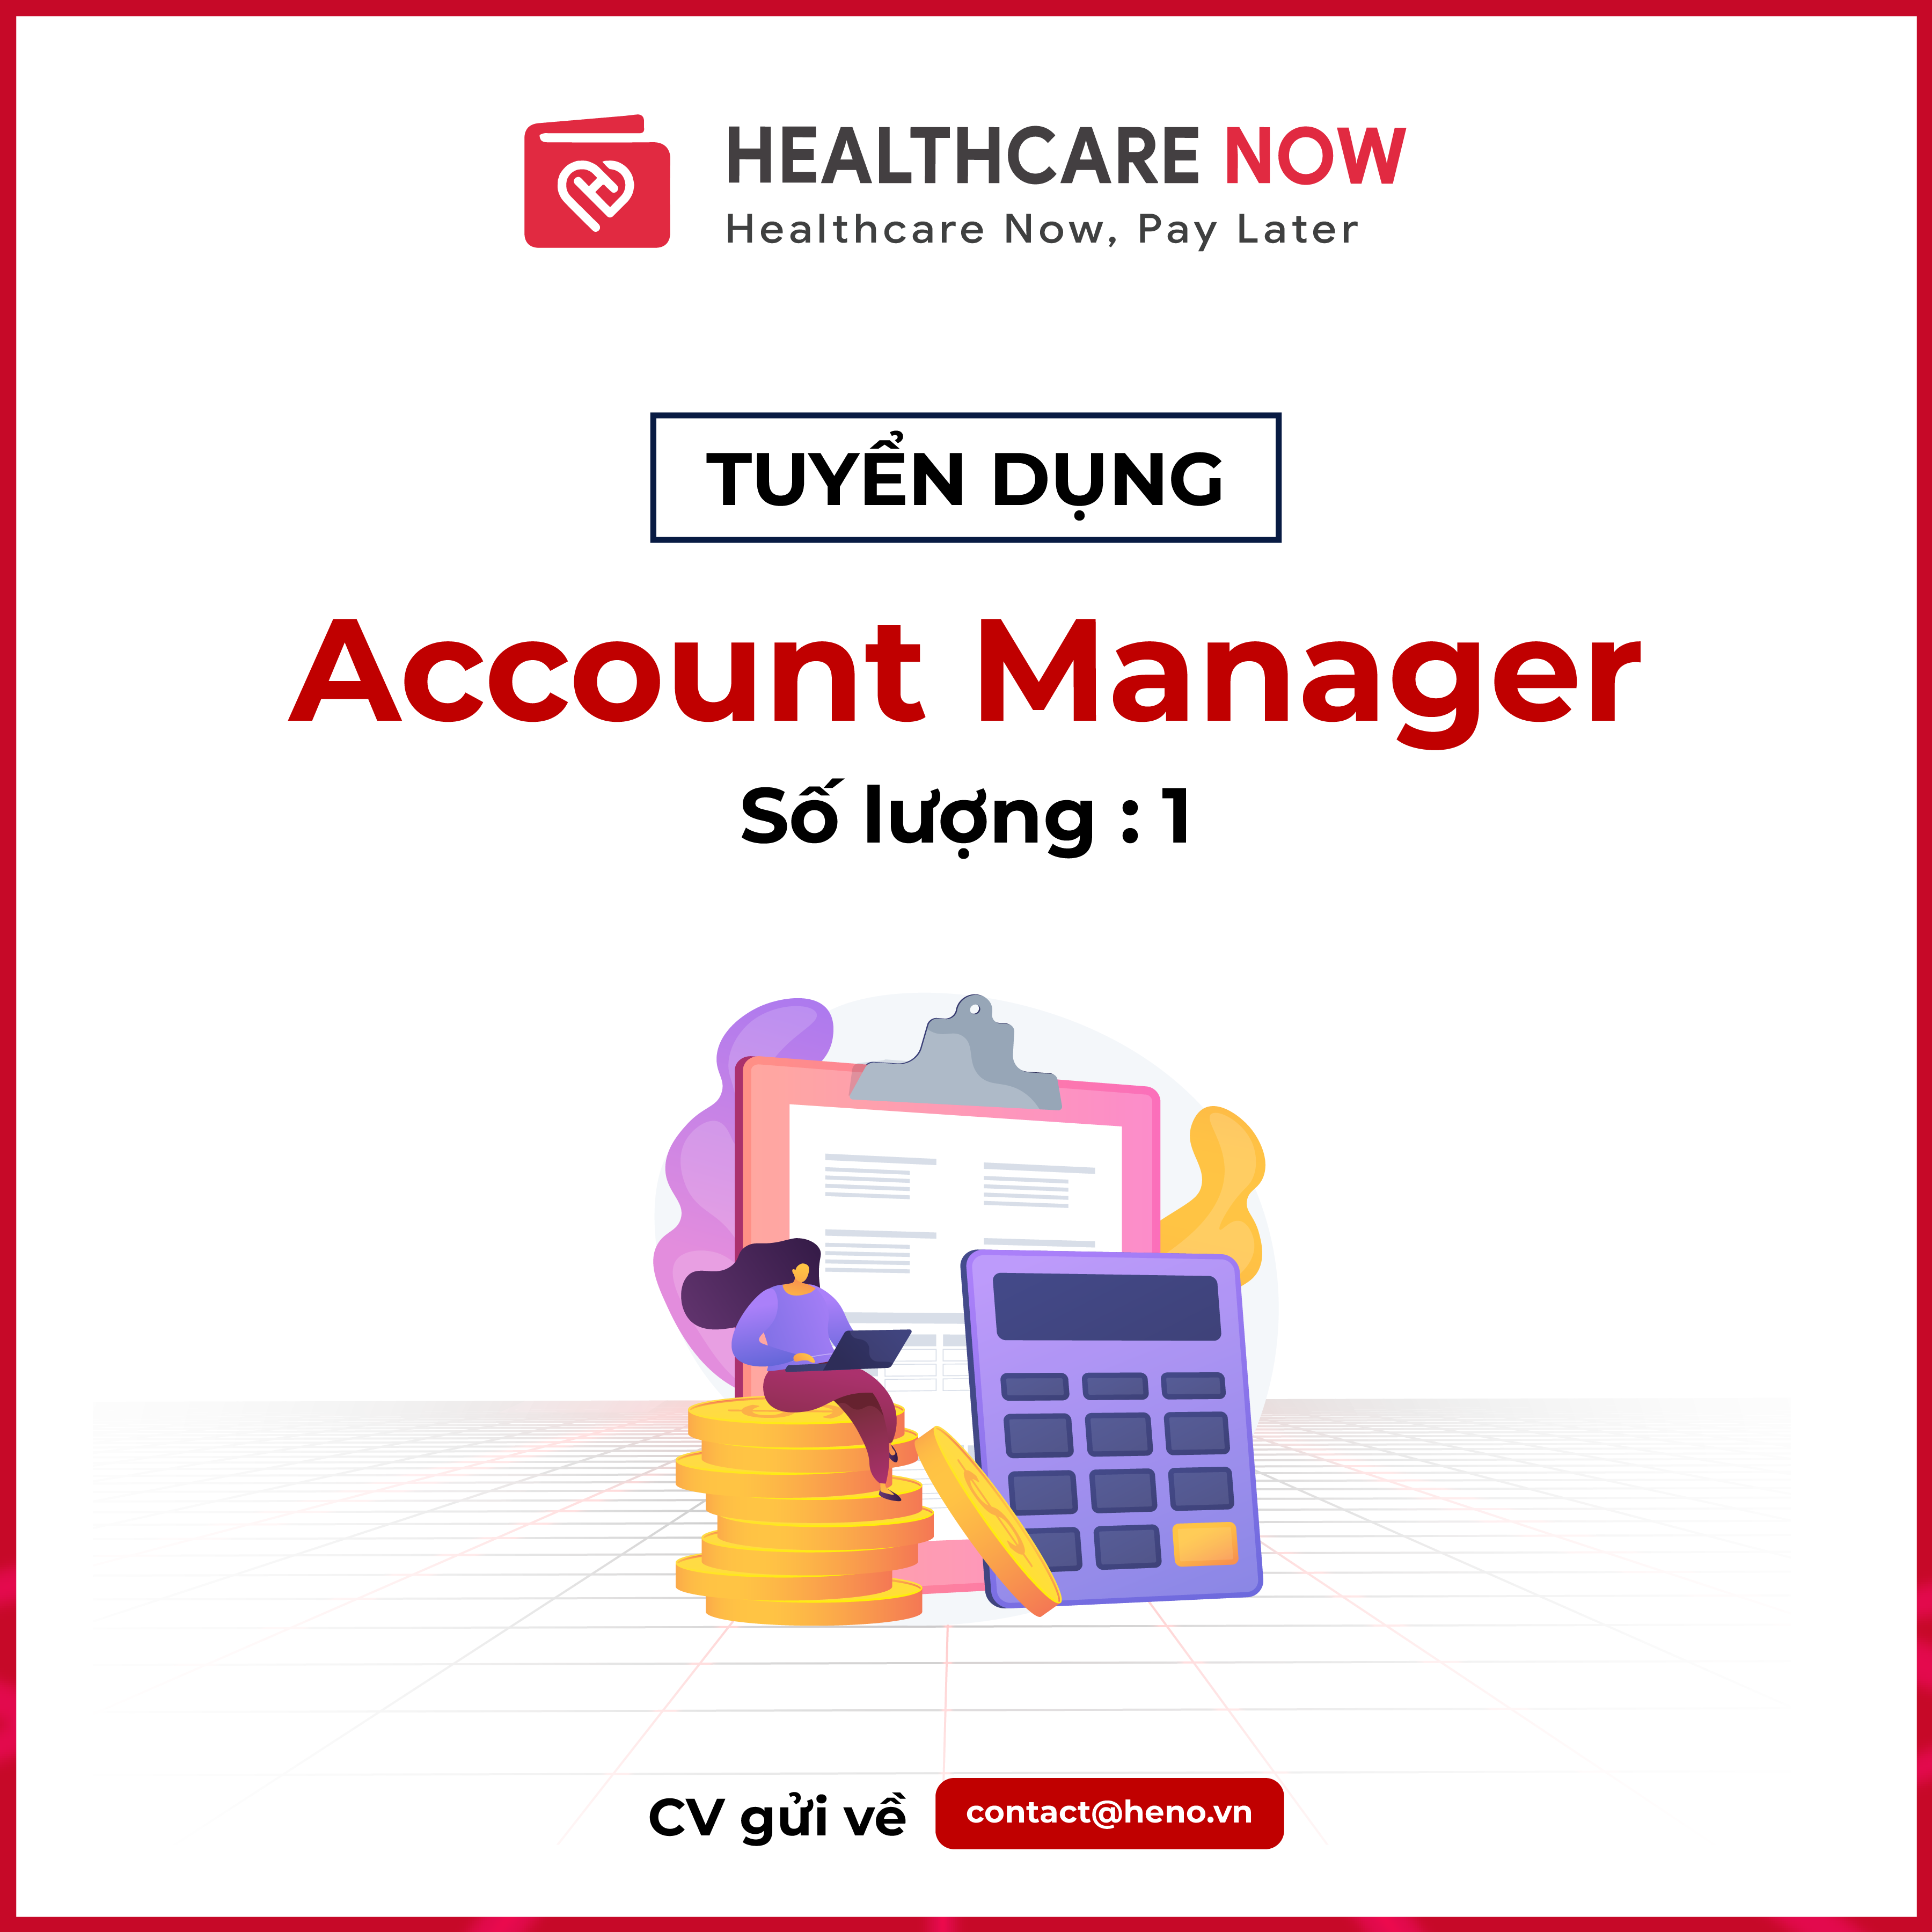 HENO_Account Manager Recruitment